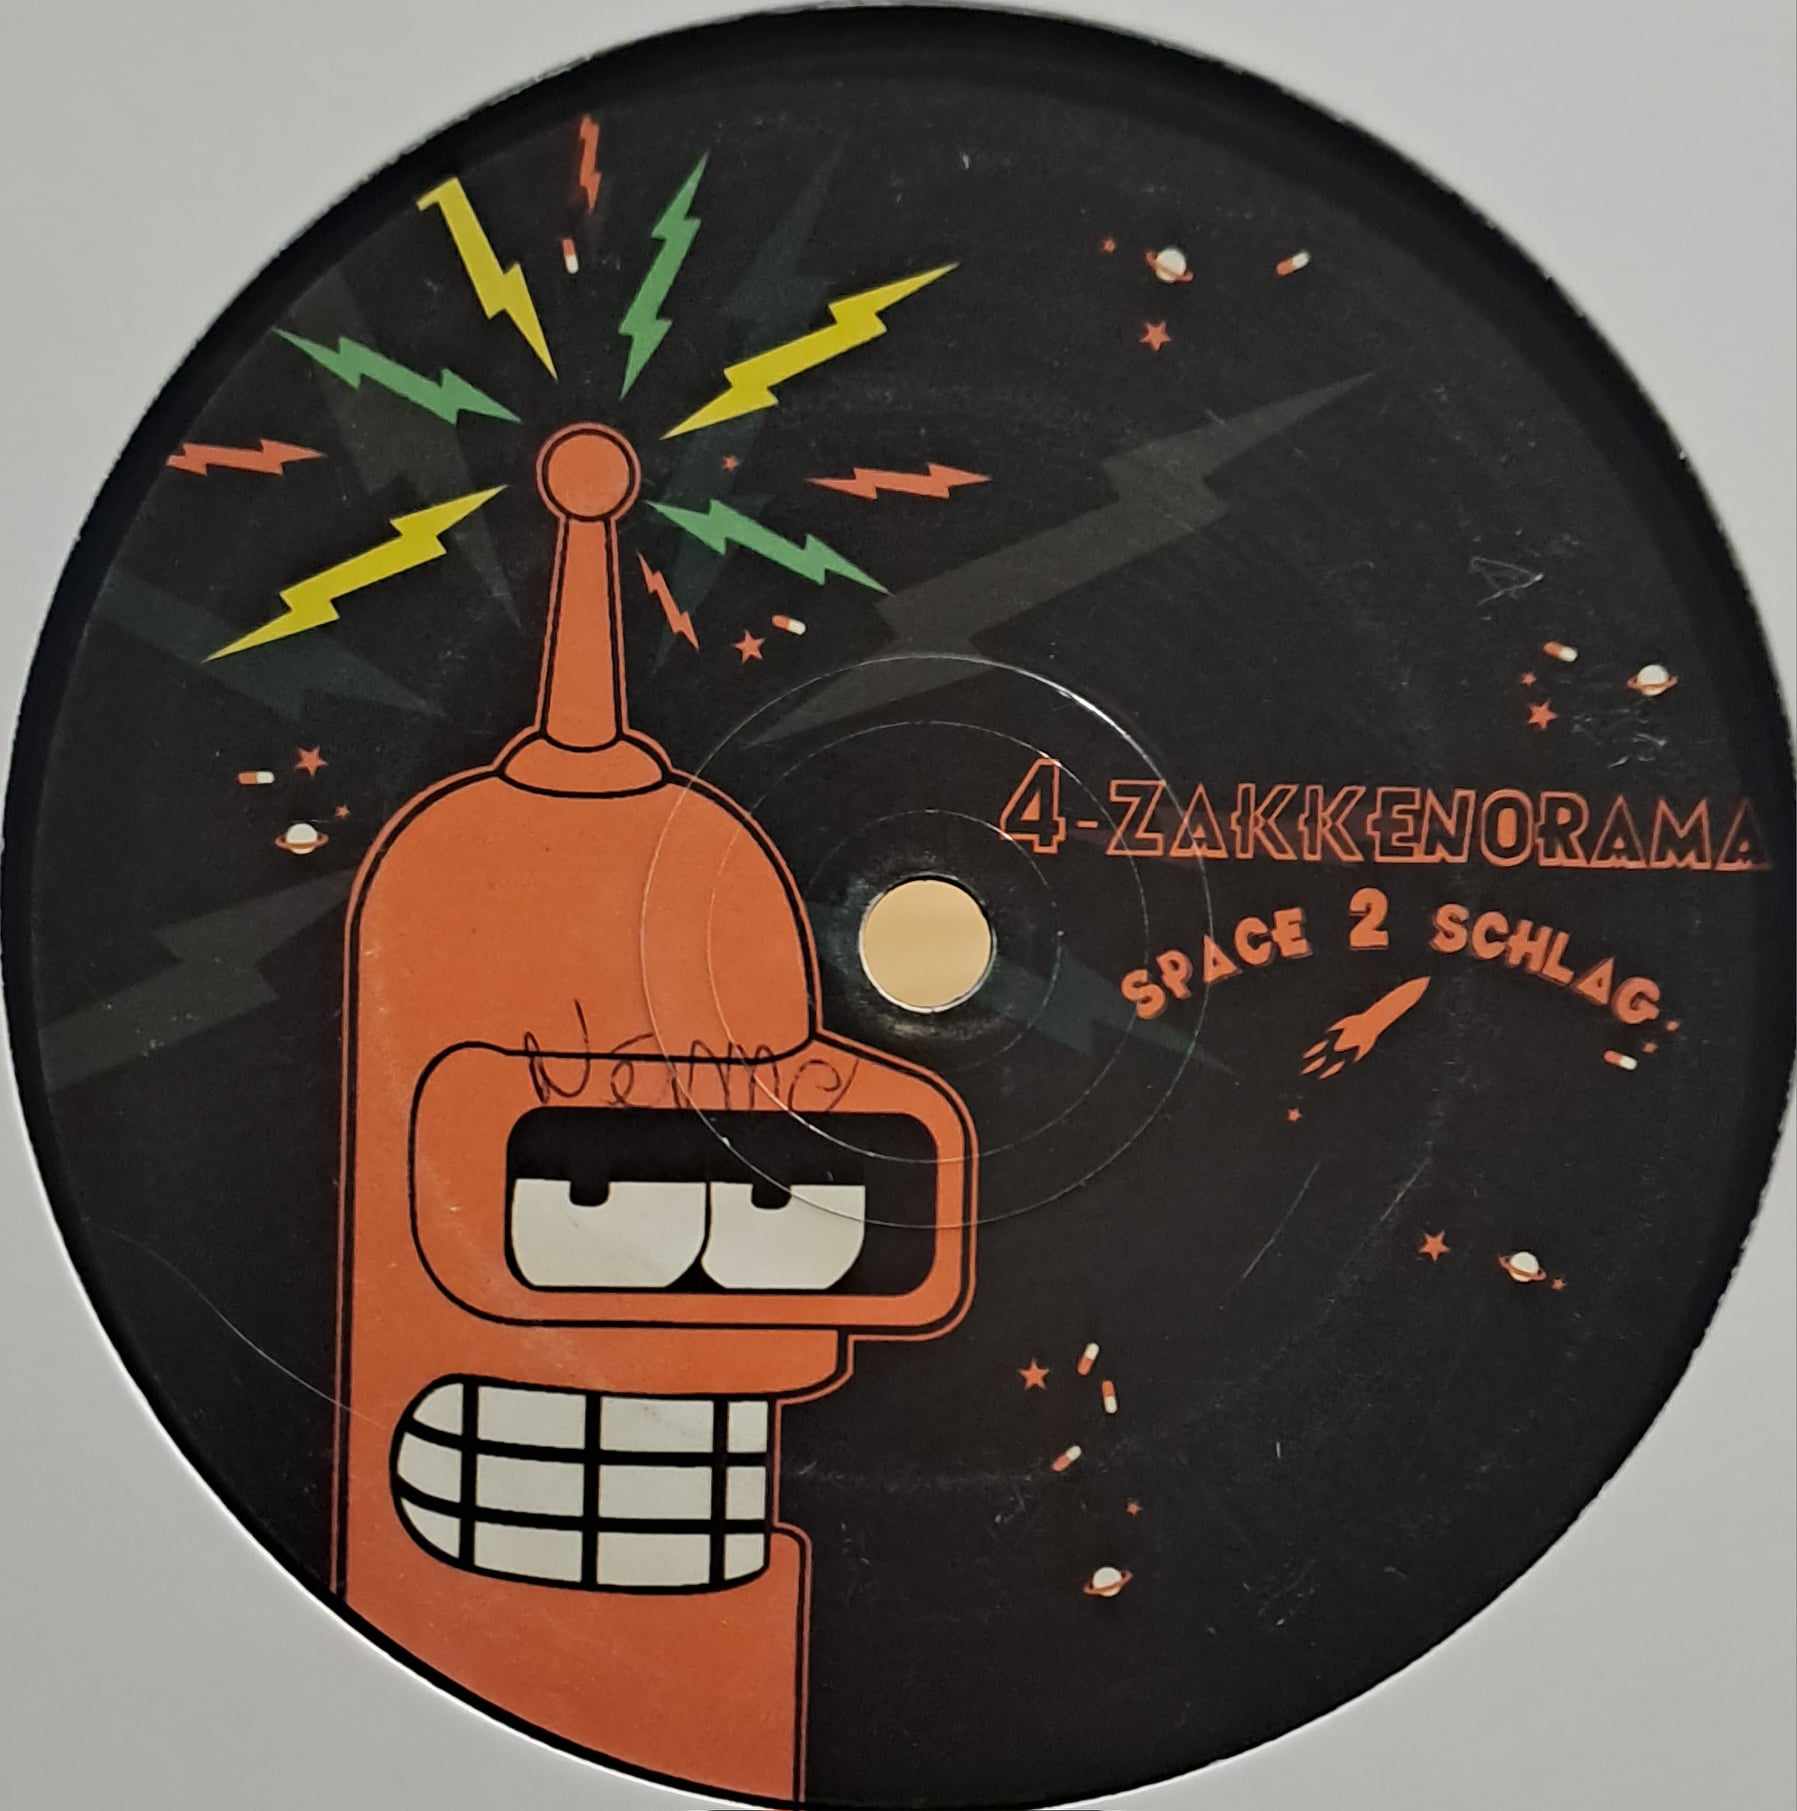 Space 2 Schlag 02 - vinyle freetekno